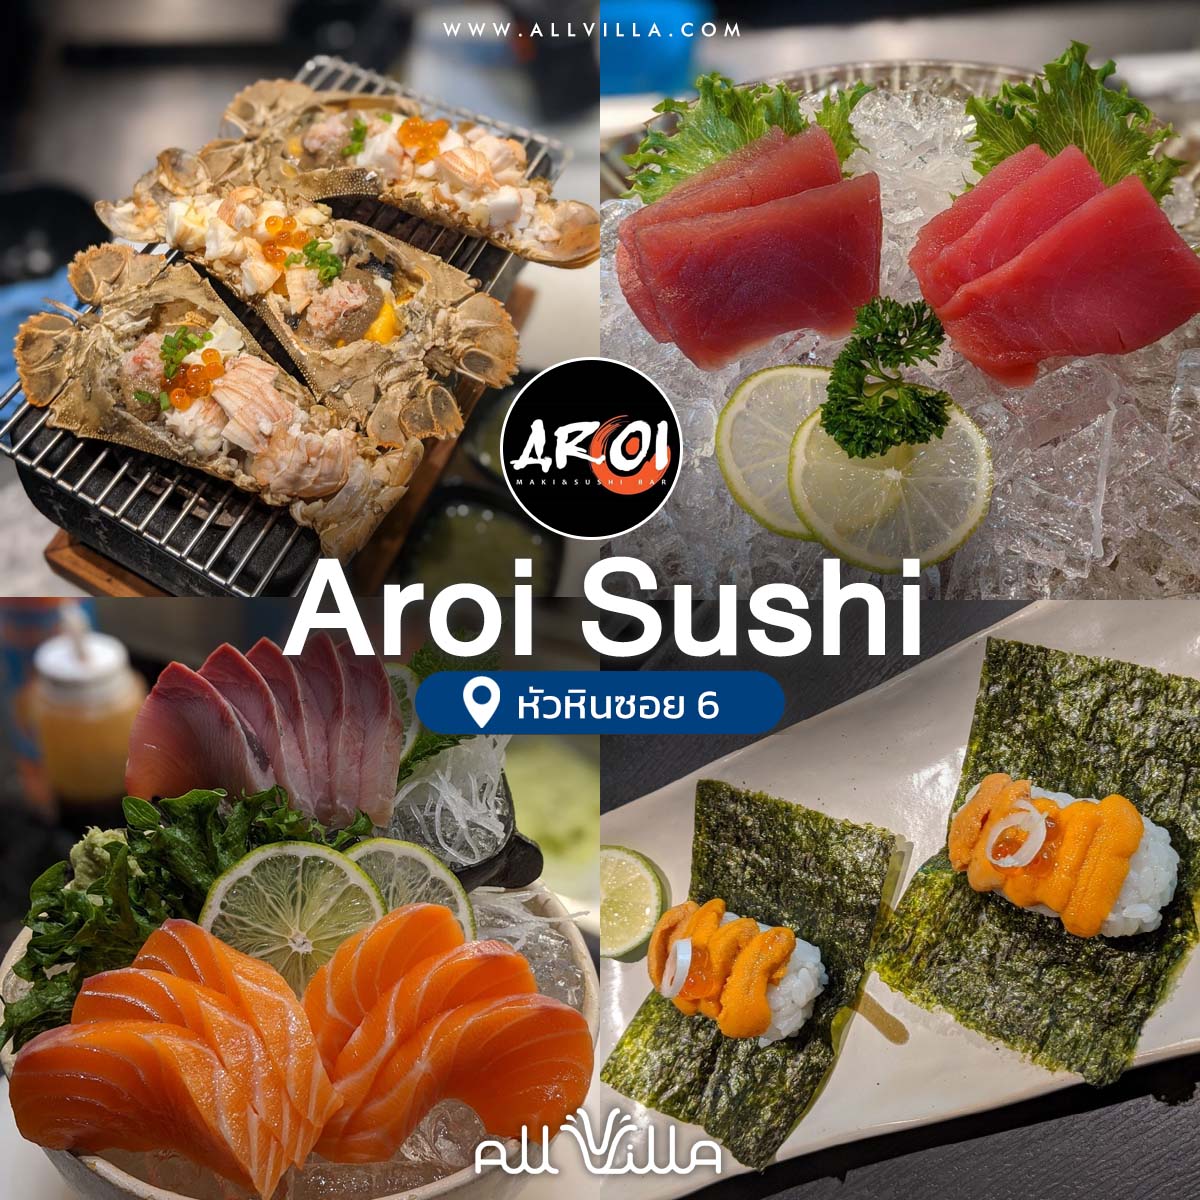 Aroi Sushi หัวหินซอย 6